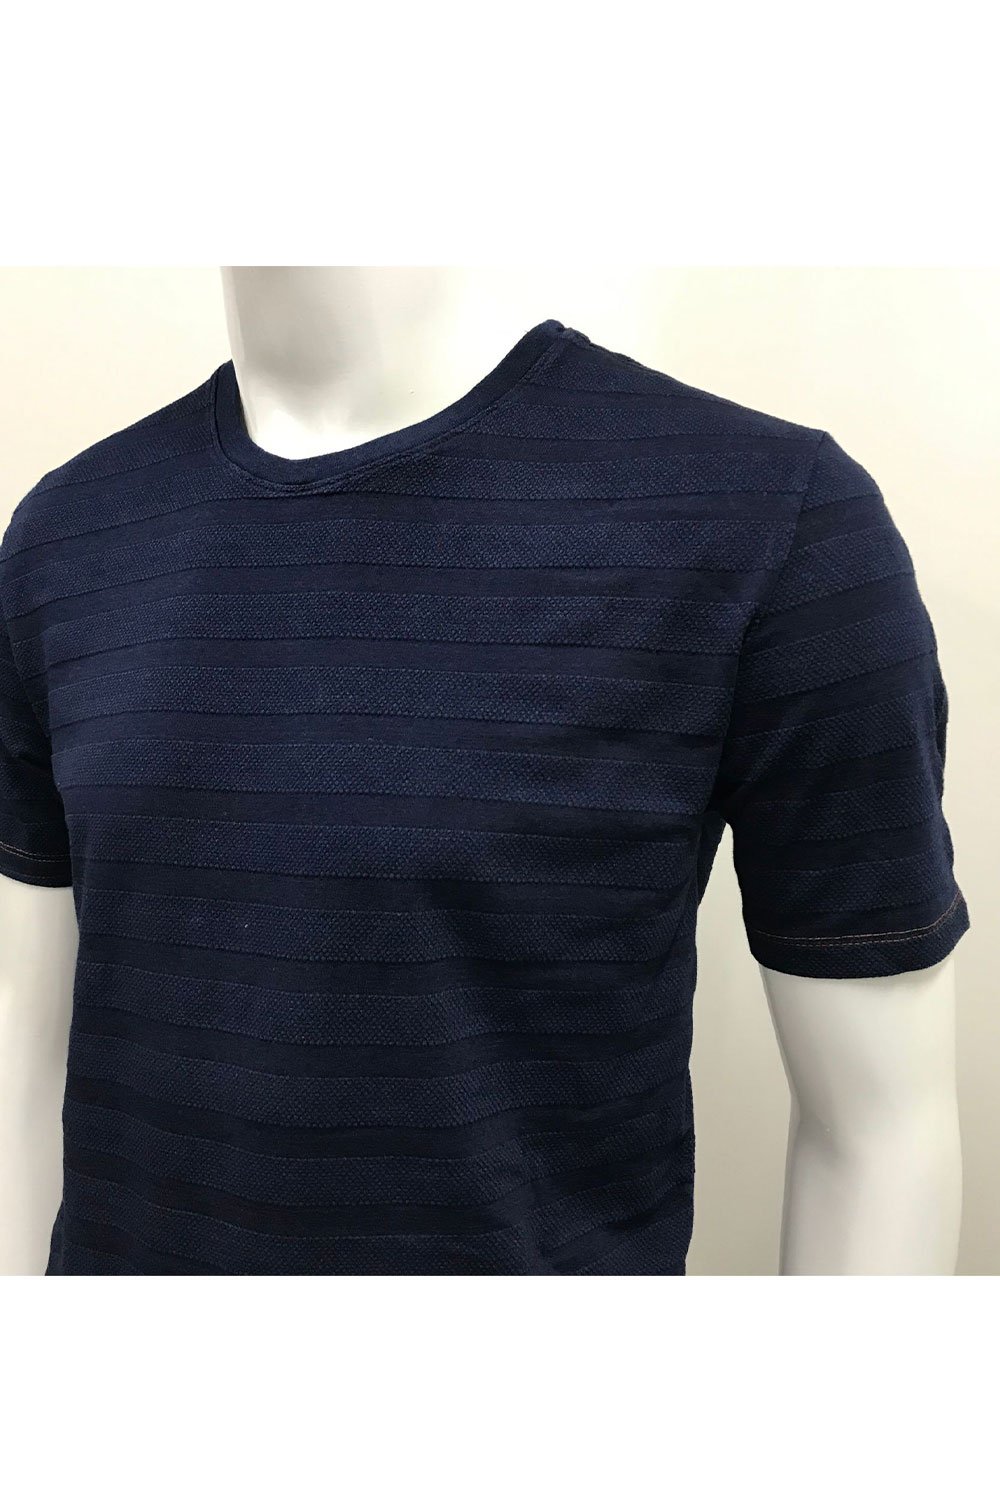 camiseta masculina marinho amaciado meia malha denim stonada seeder se0301107 di0247